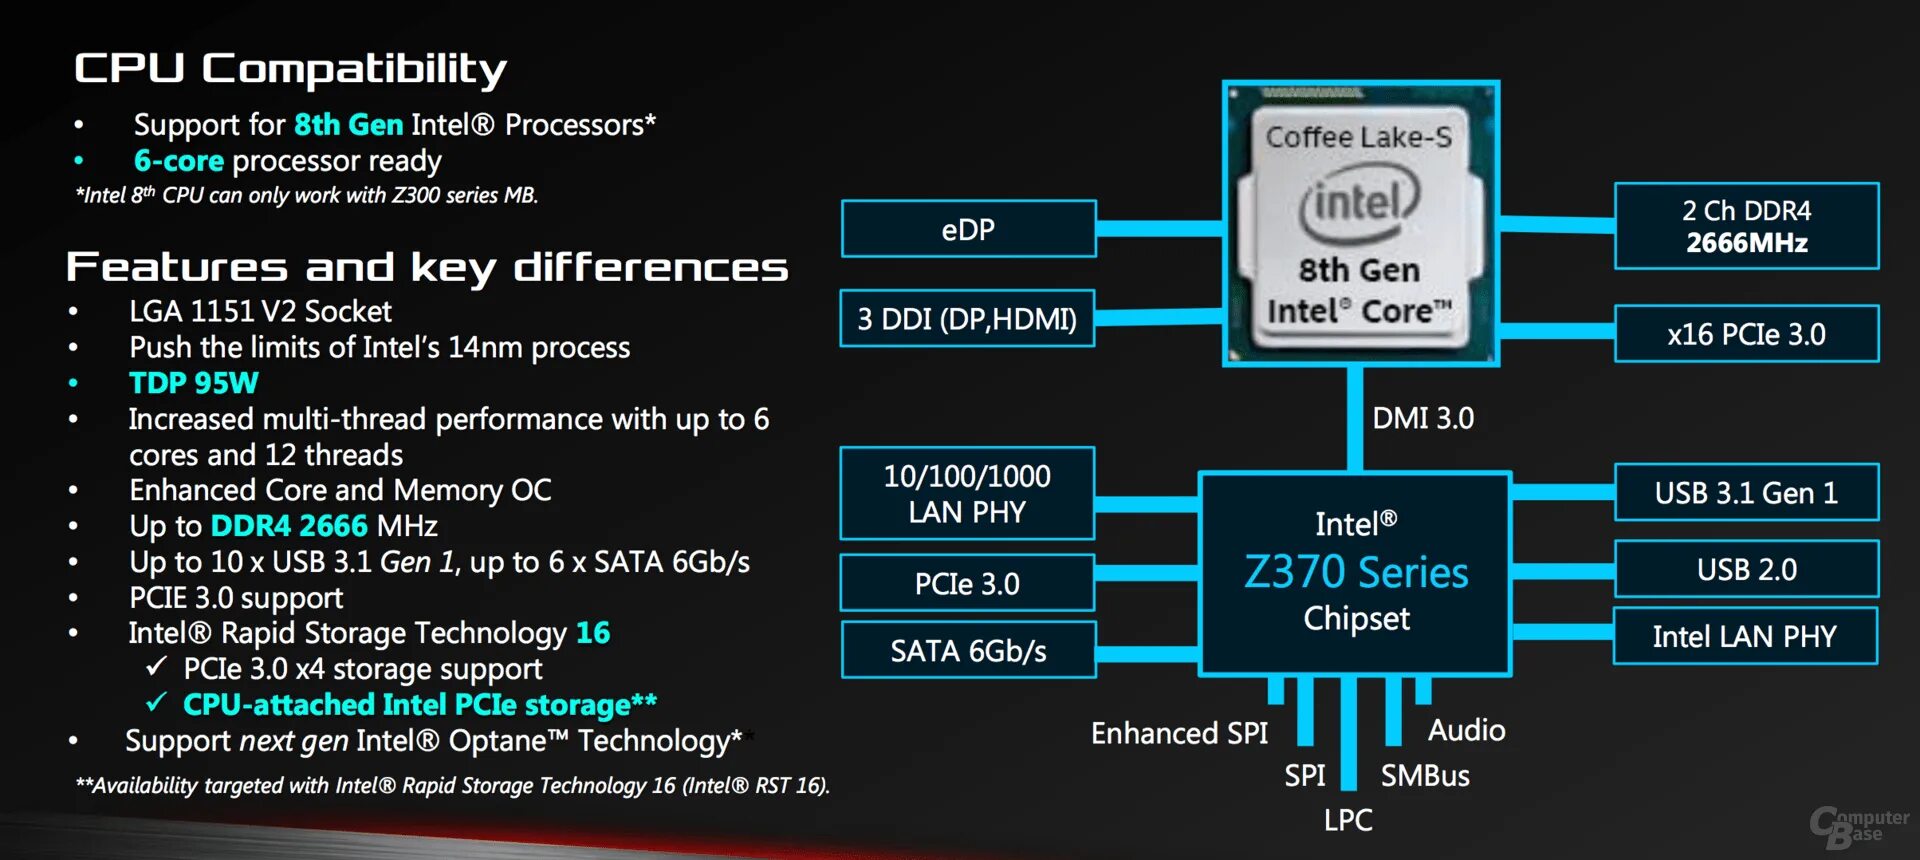 Intel r 7 series chipset. Intel Coffee Lake-s IMC. Архитектура Intel i7 8700. Intel DMI 4.0. Processor 8th Gen Intel.